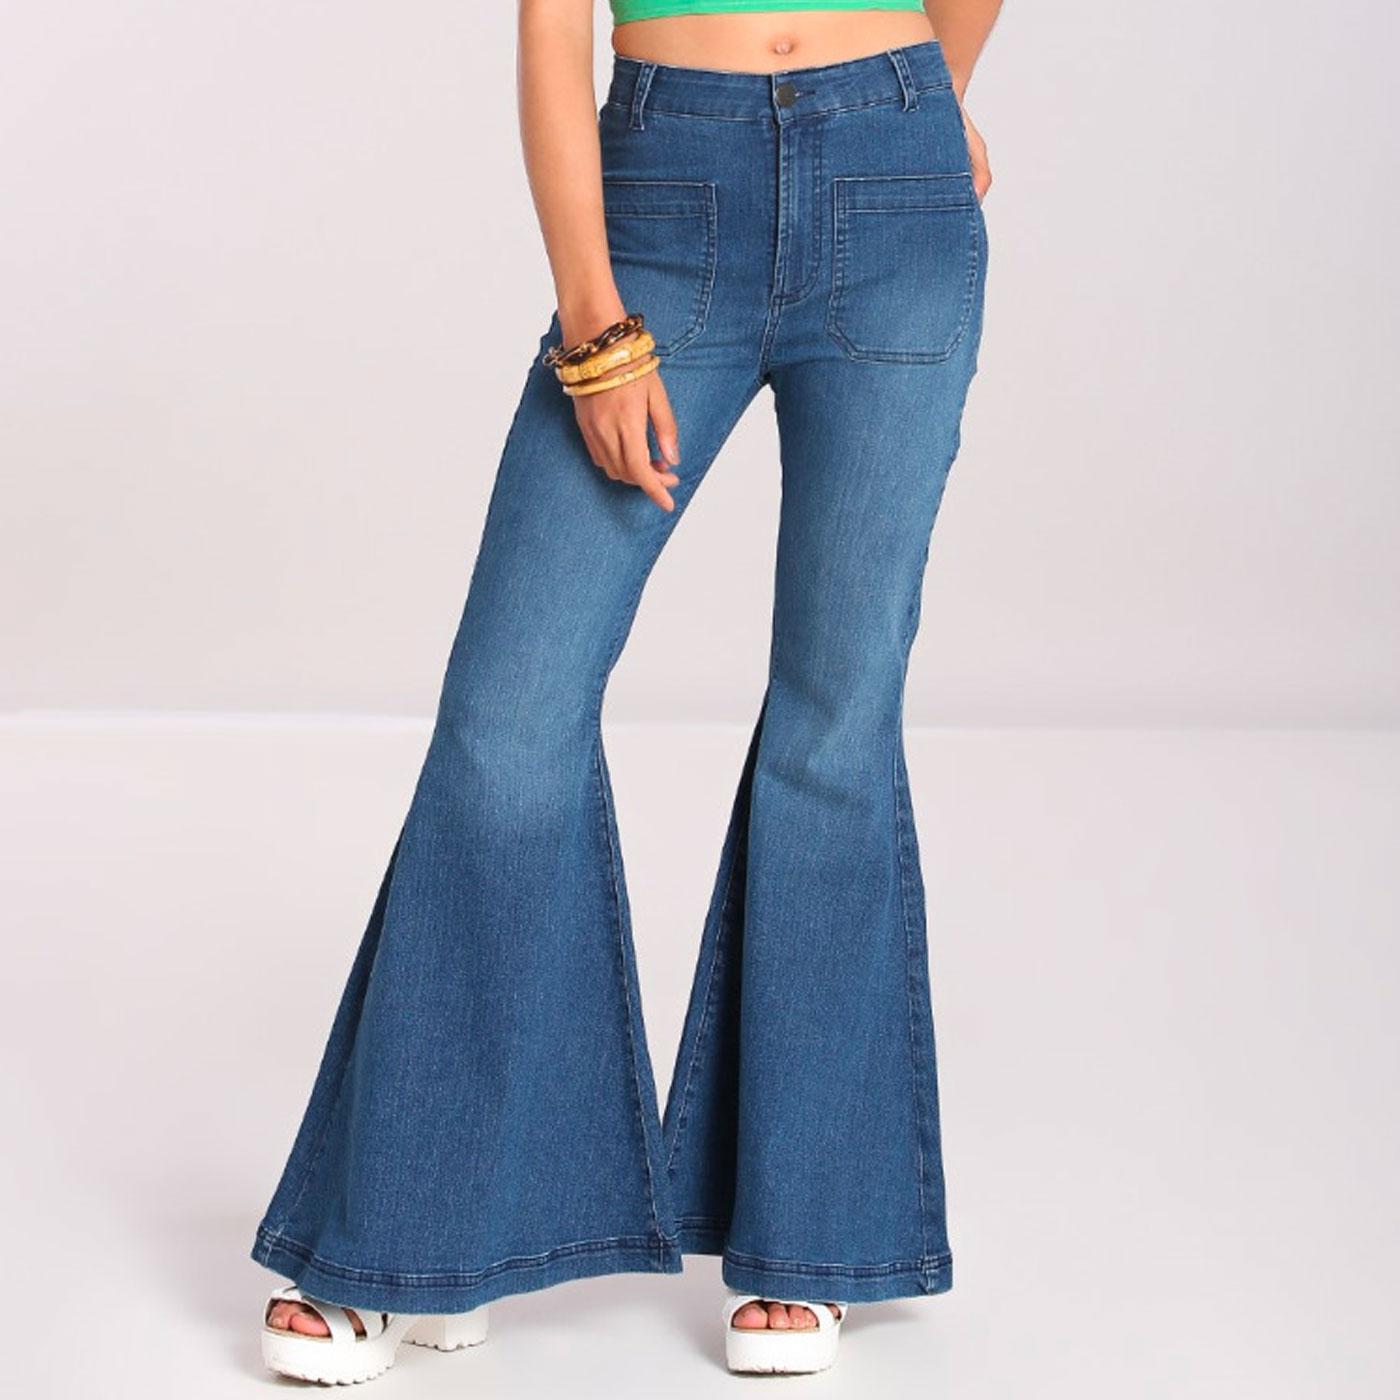 Janis HELL BUNNY Retro 70s Bellbottom Denim Jeans